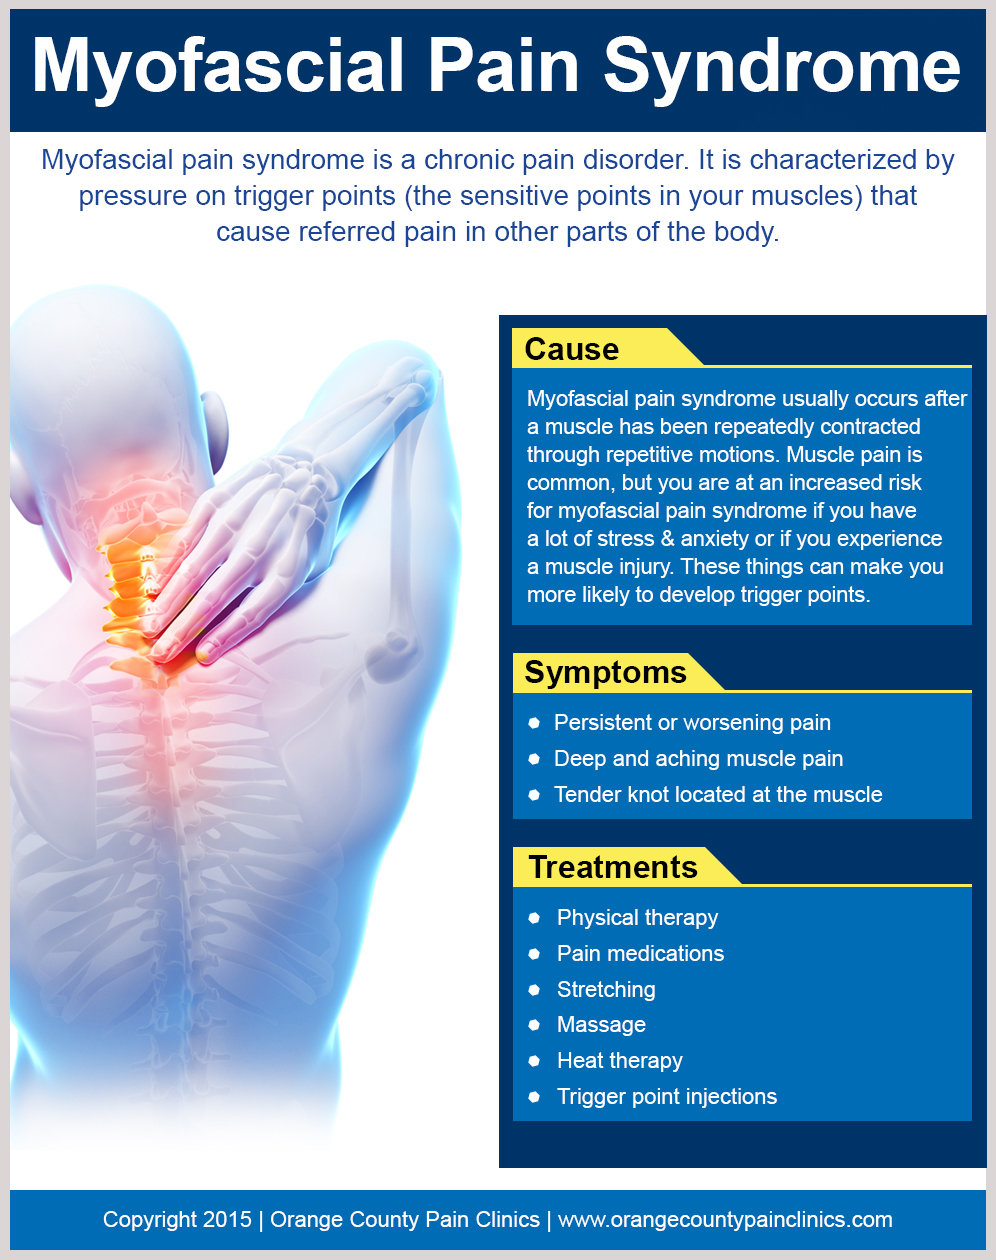 Myofascial-Pain-Syndrome-by-Orange-County-Pain-Clinics